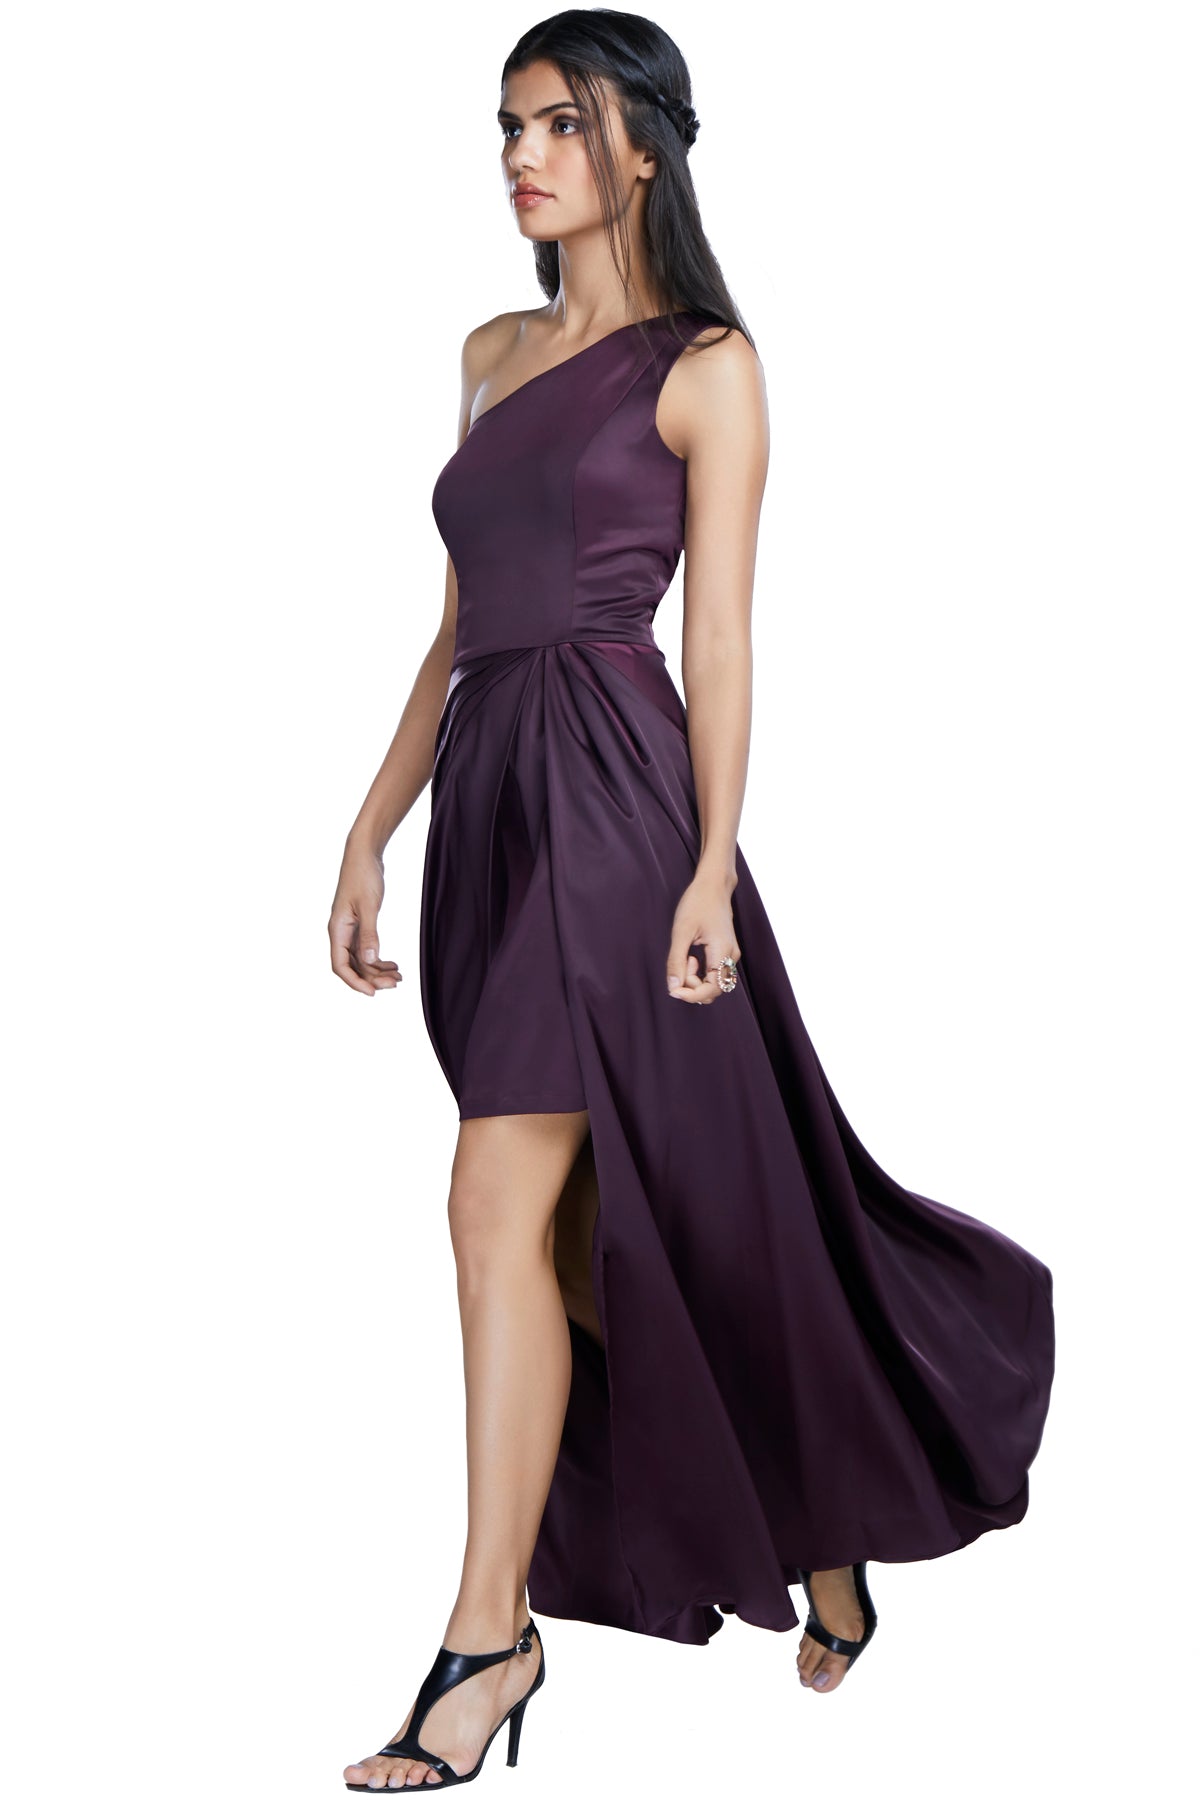 Purple One Shoulder Cocktail Dress